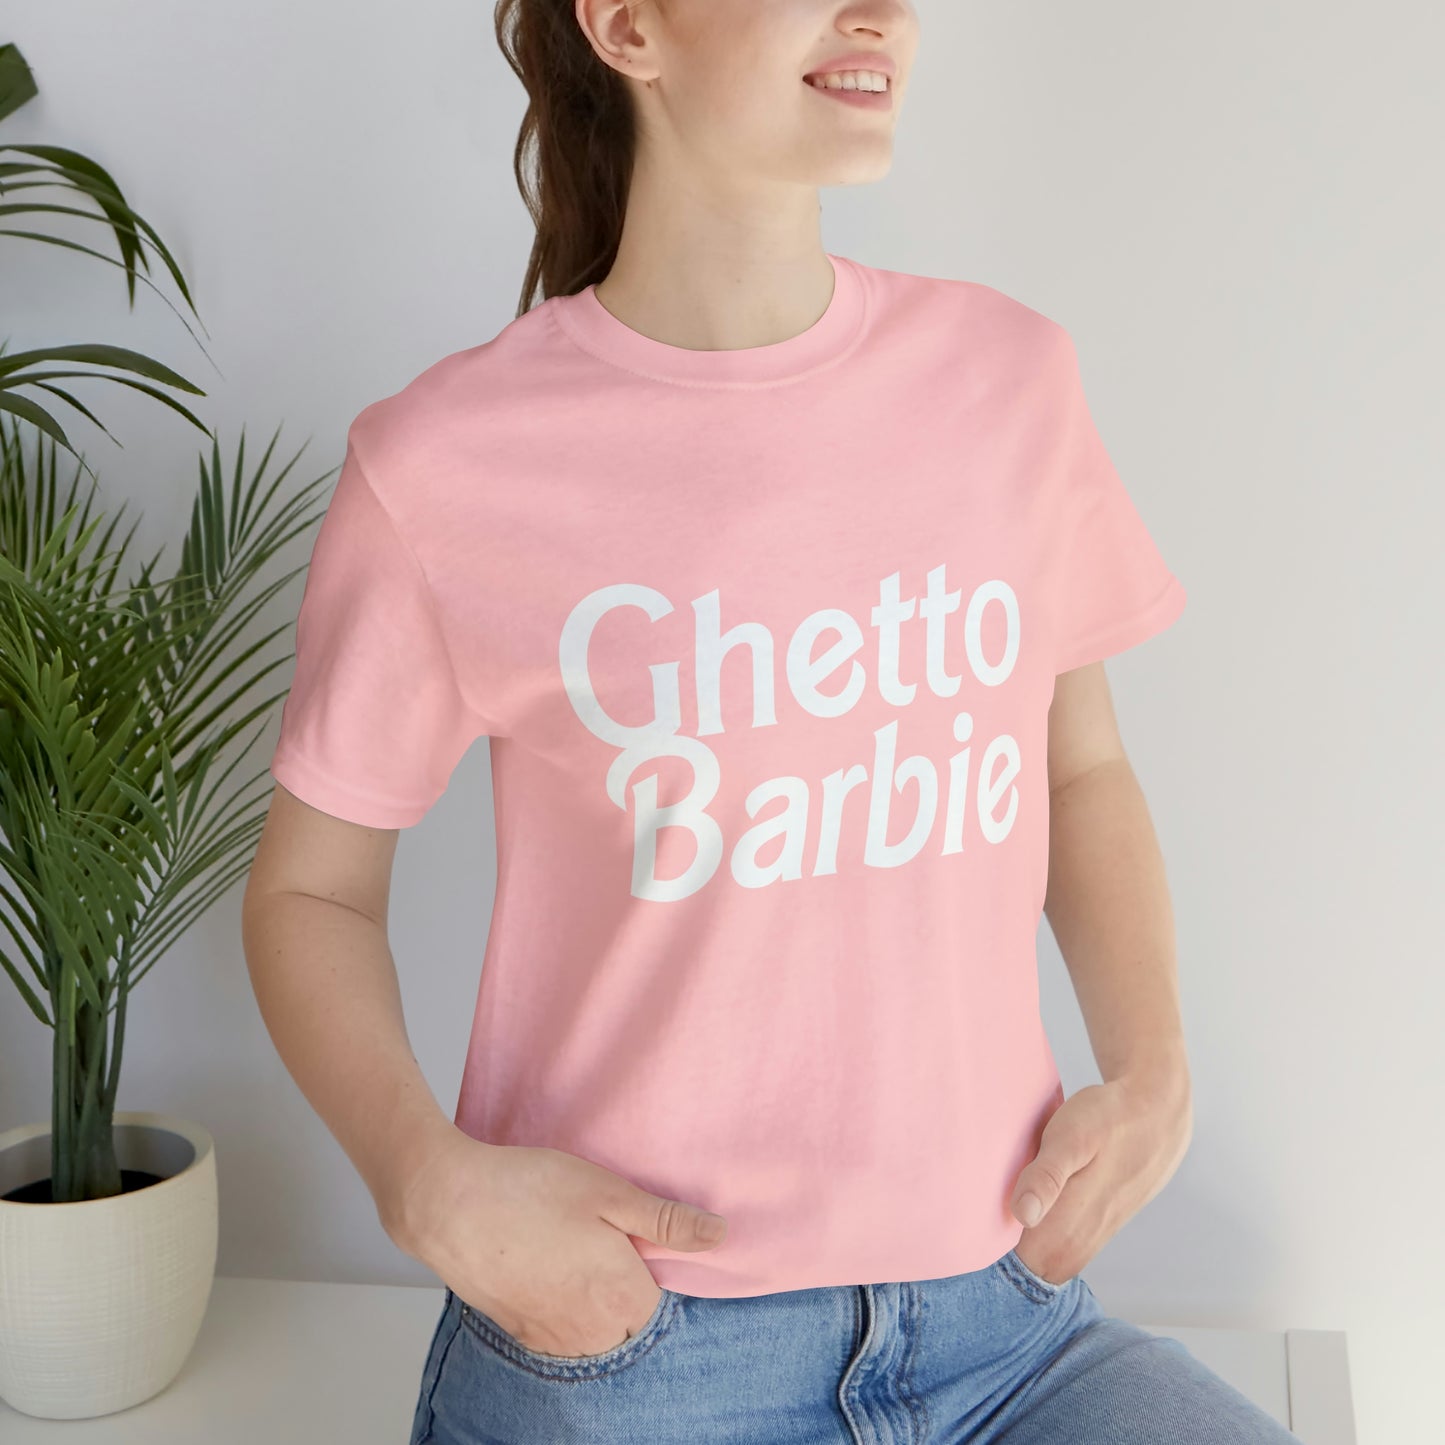 Ghetto Barbie